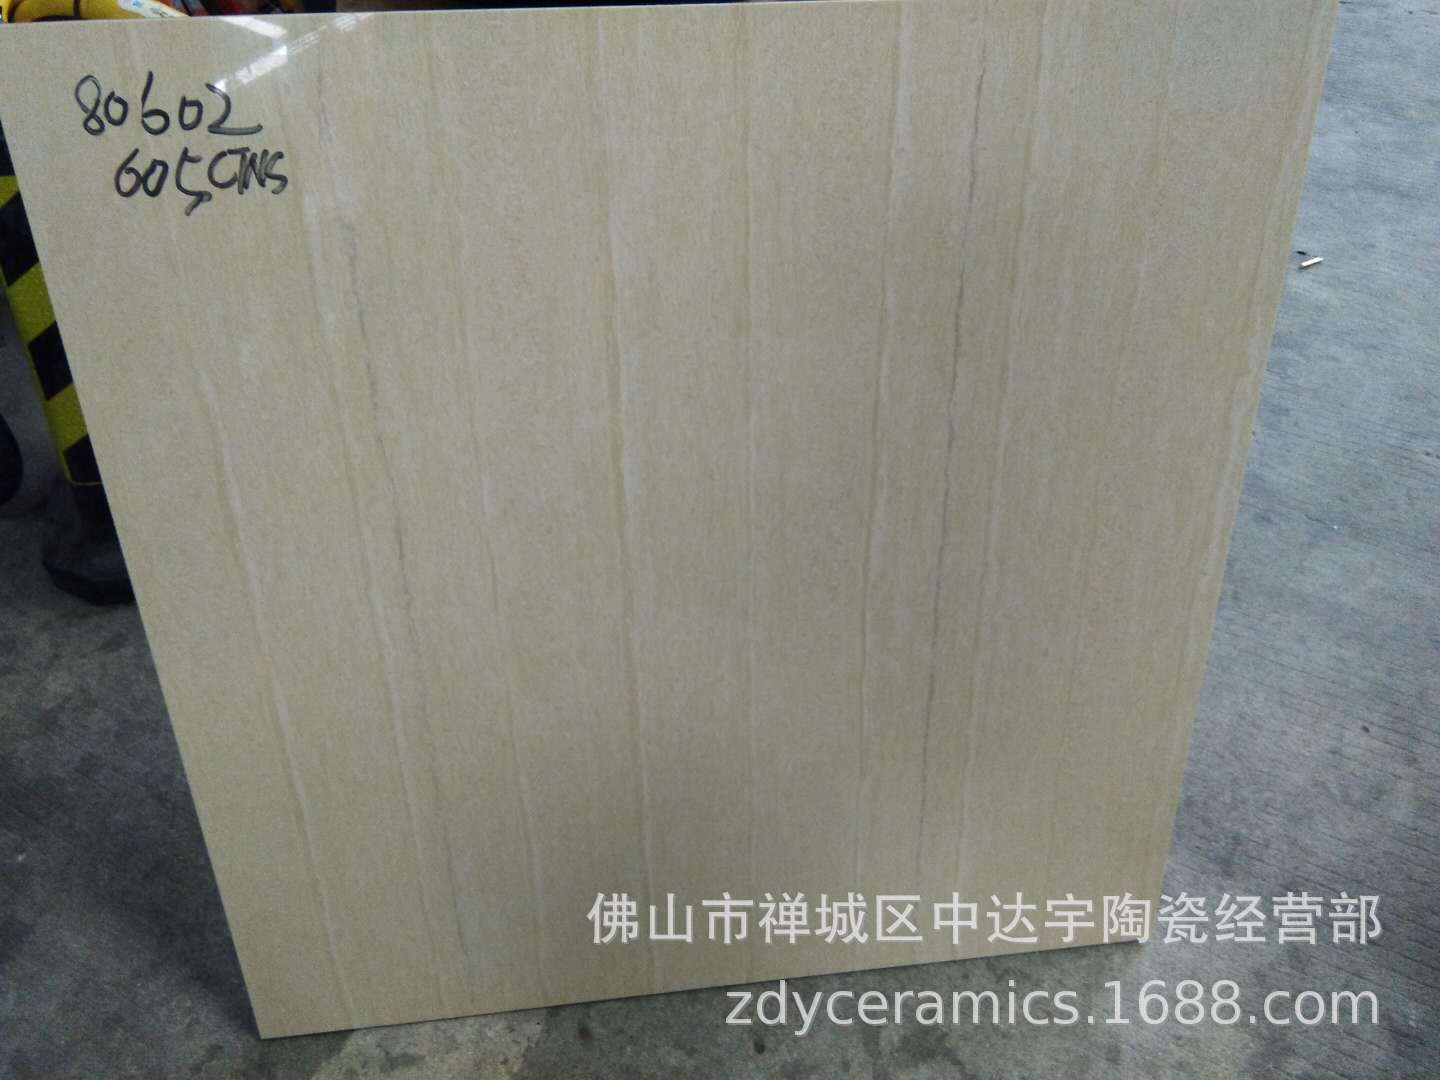 OM 80x80cm颗粒线石系列抛光瓷砖防滑防潮客厅厨房浴室地面砖墙砖示例图1